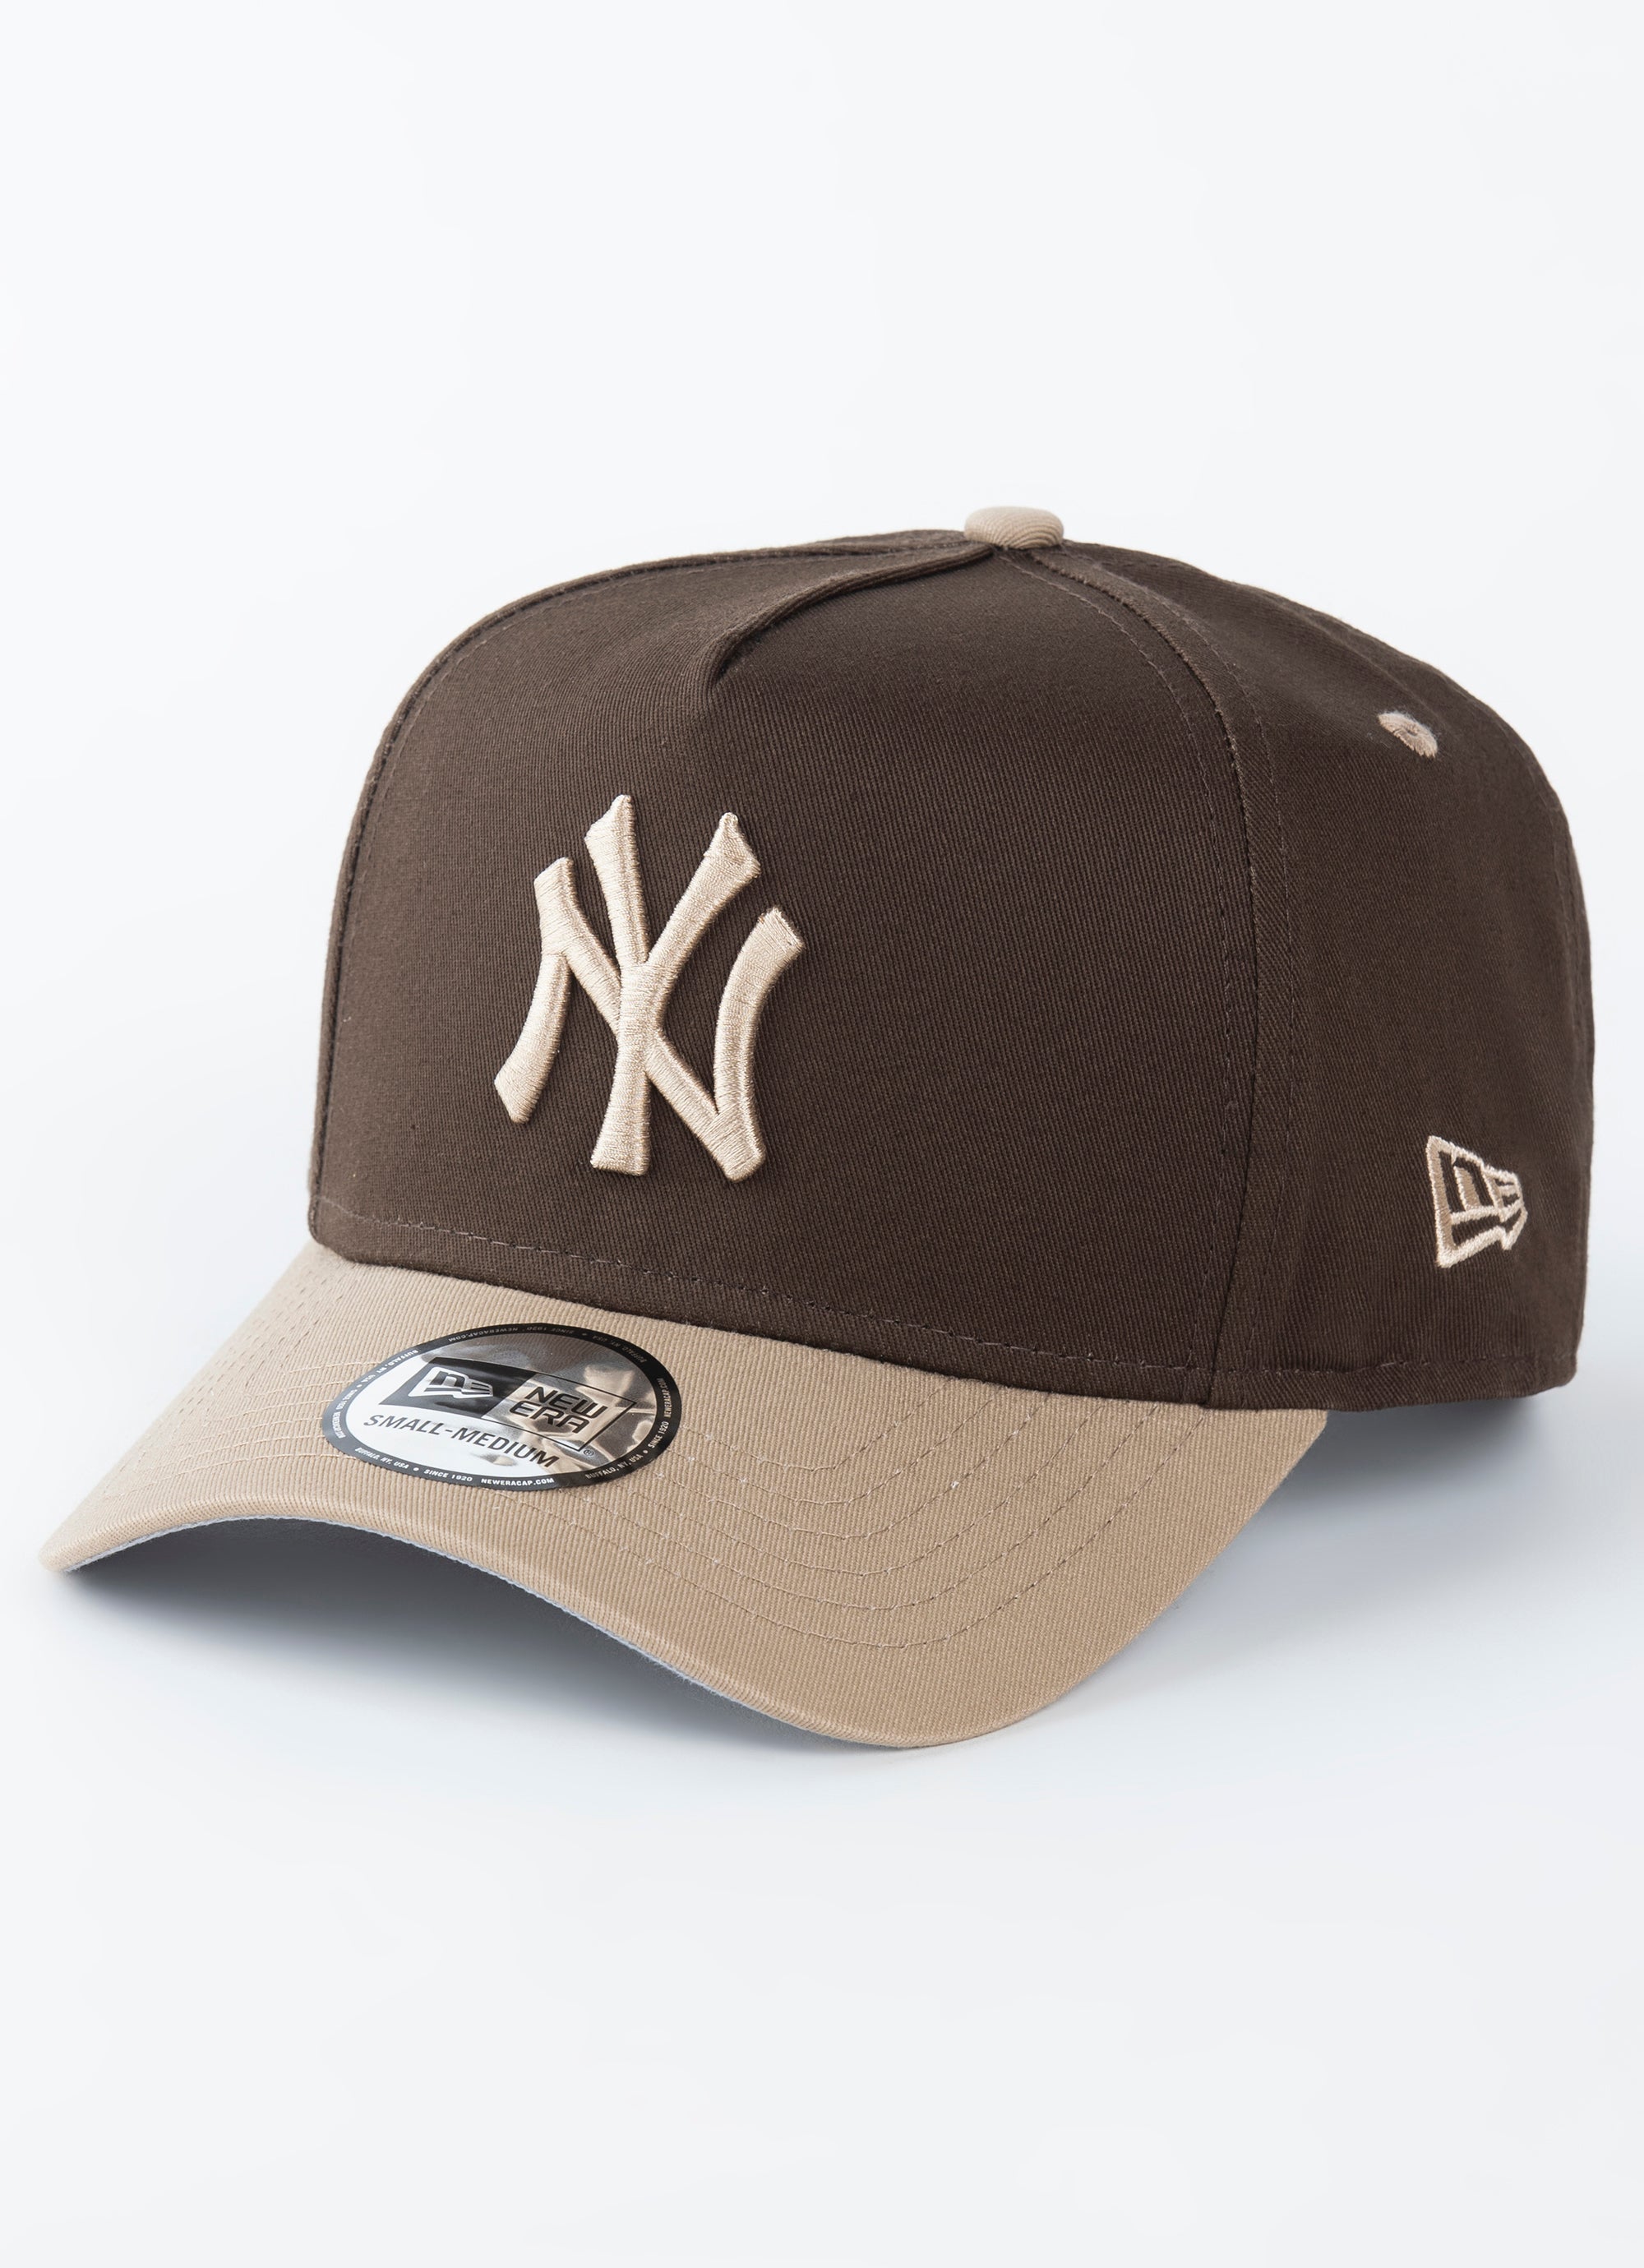 MLB New York Yankees MVP Snapback Cap Brown  47 Brand